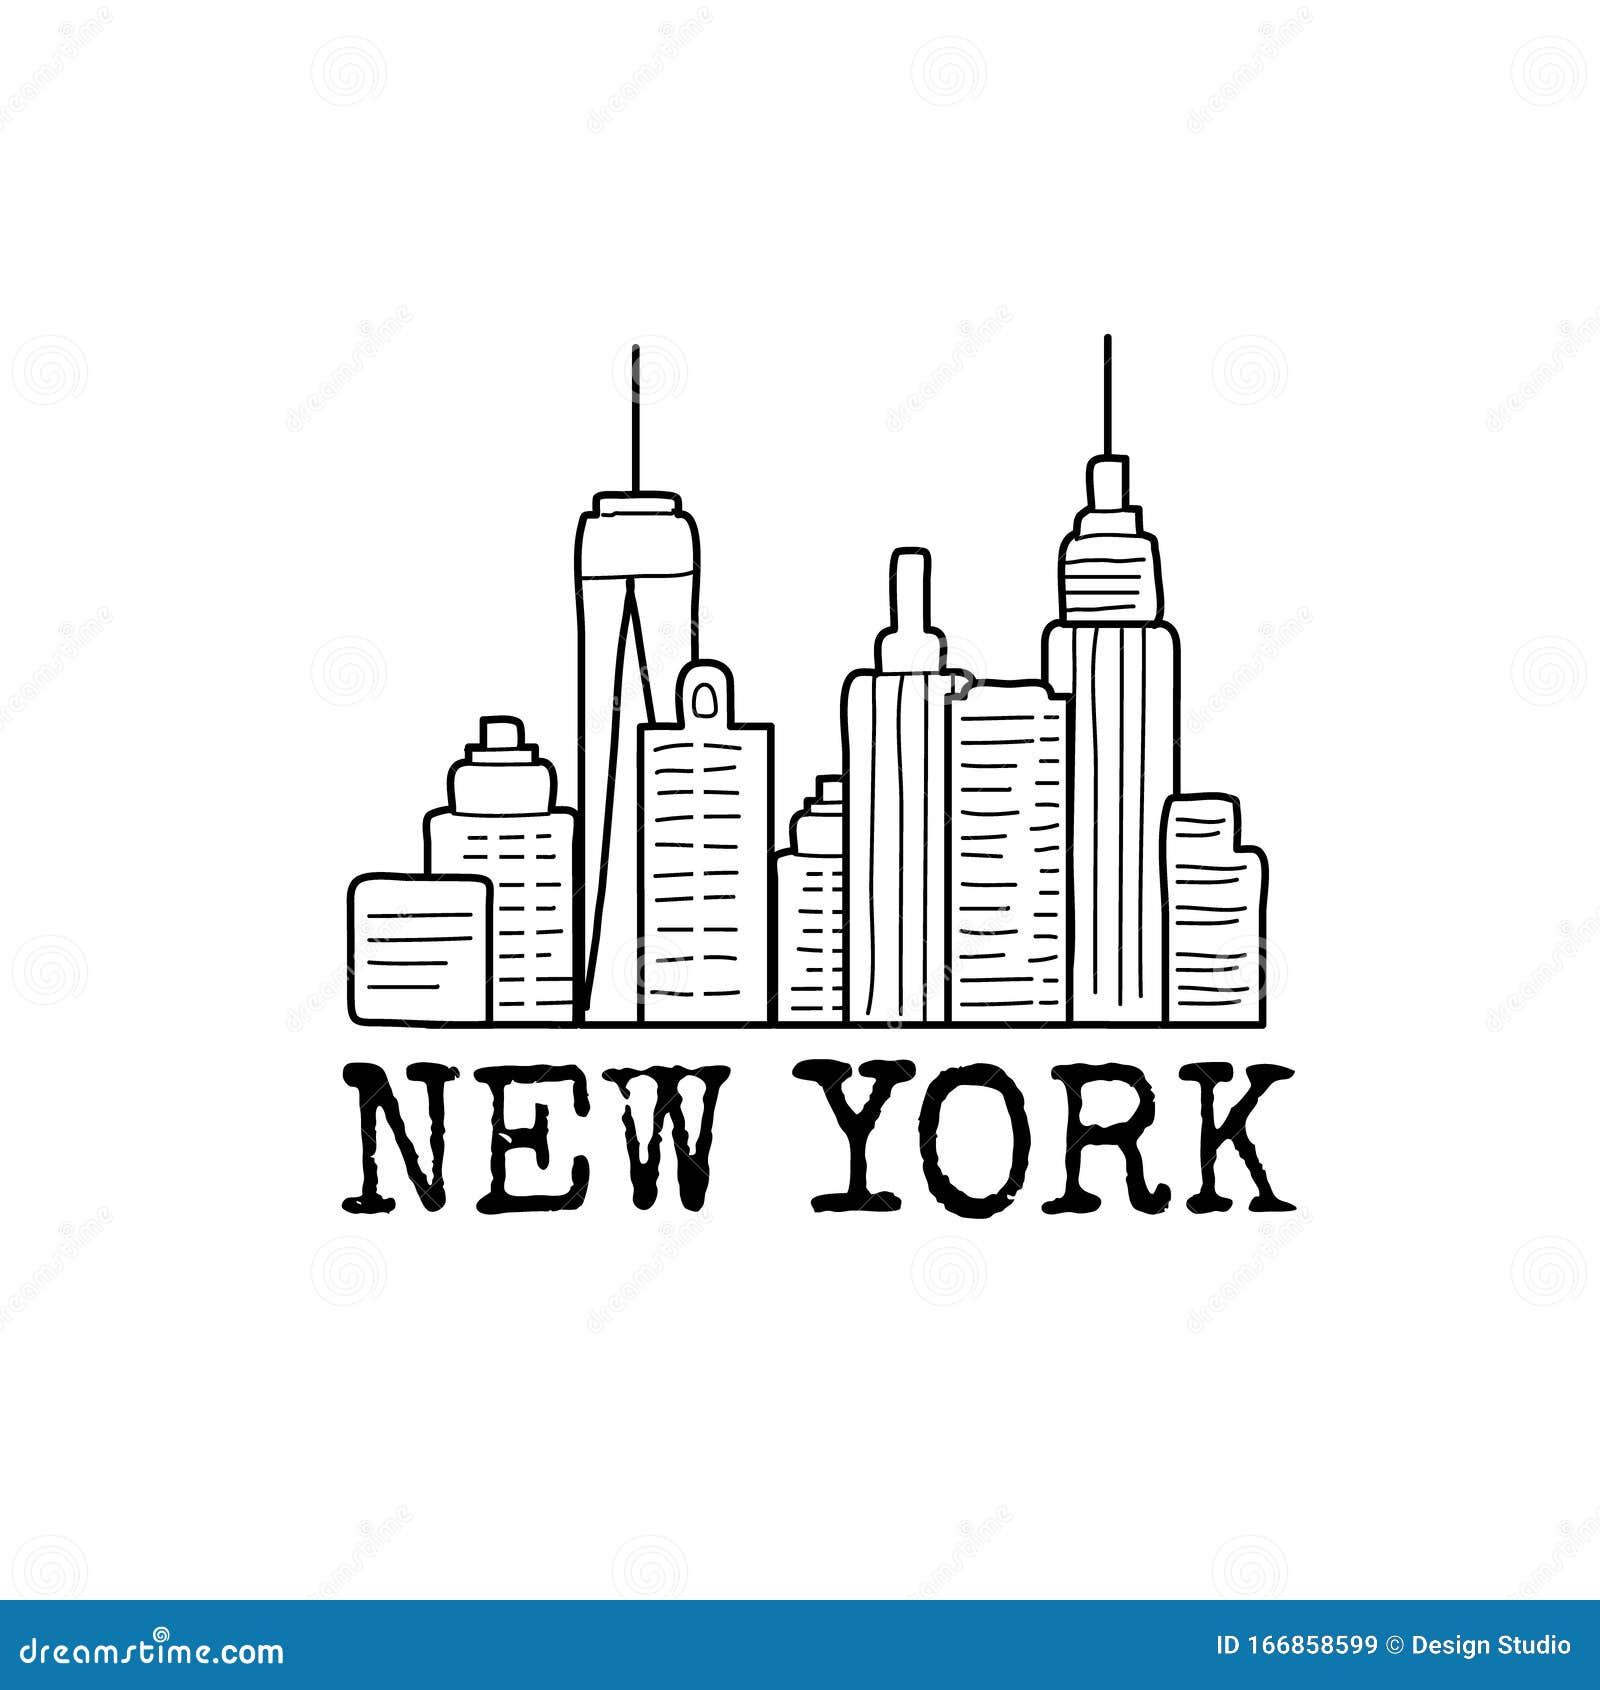 New York Landmarks Drawing